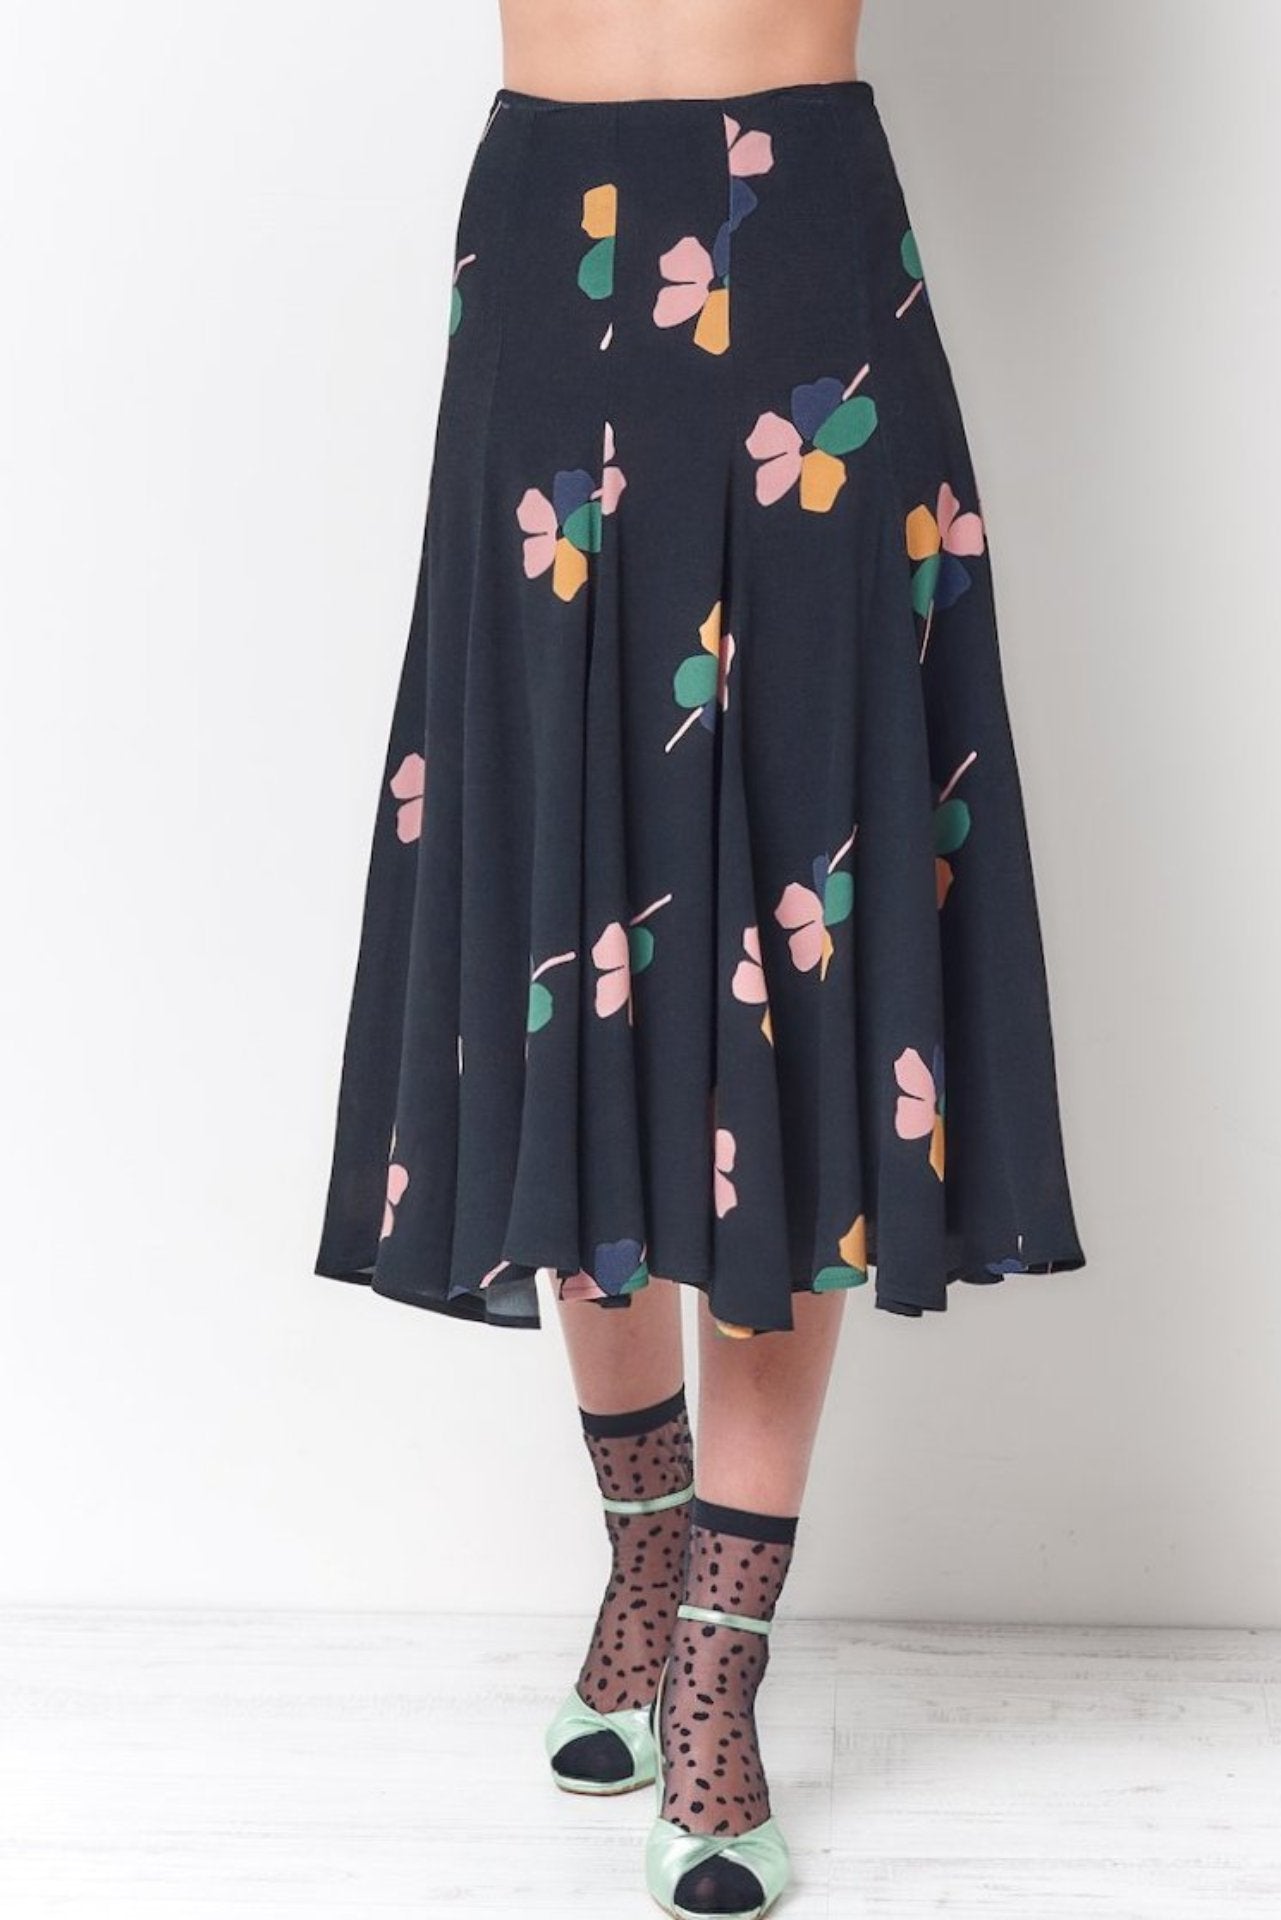 JENNA Gored Skirt - Floral – CLC by Corey Lynn Calter